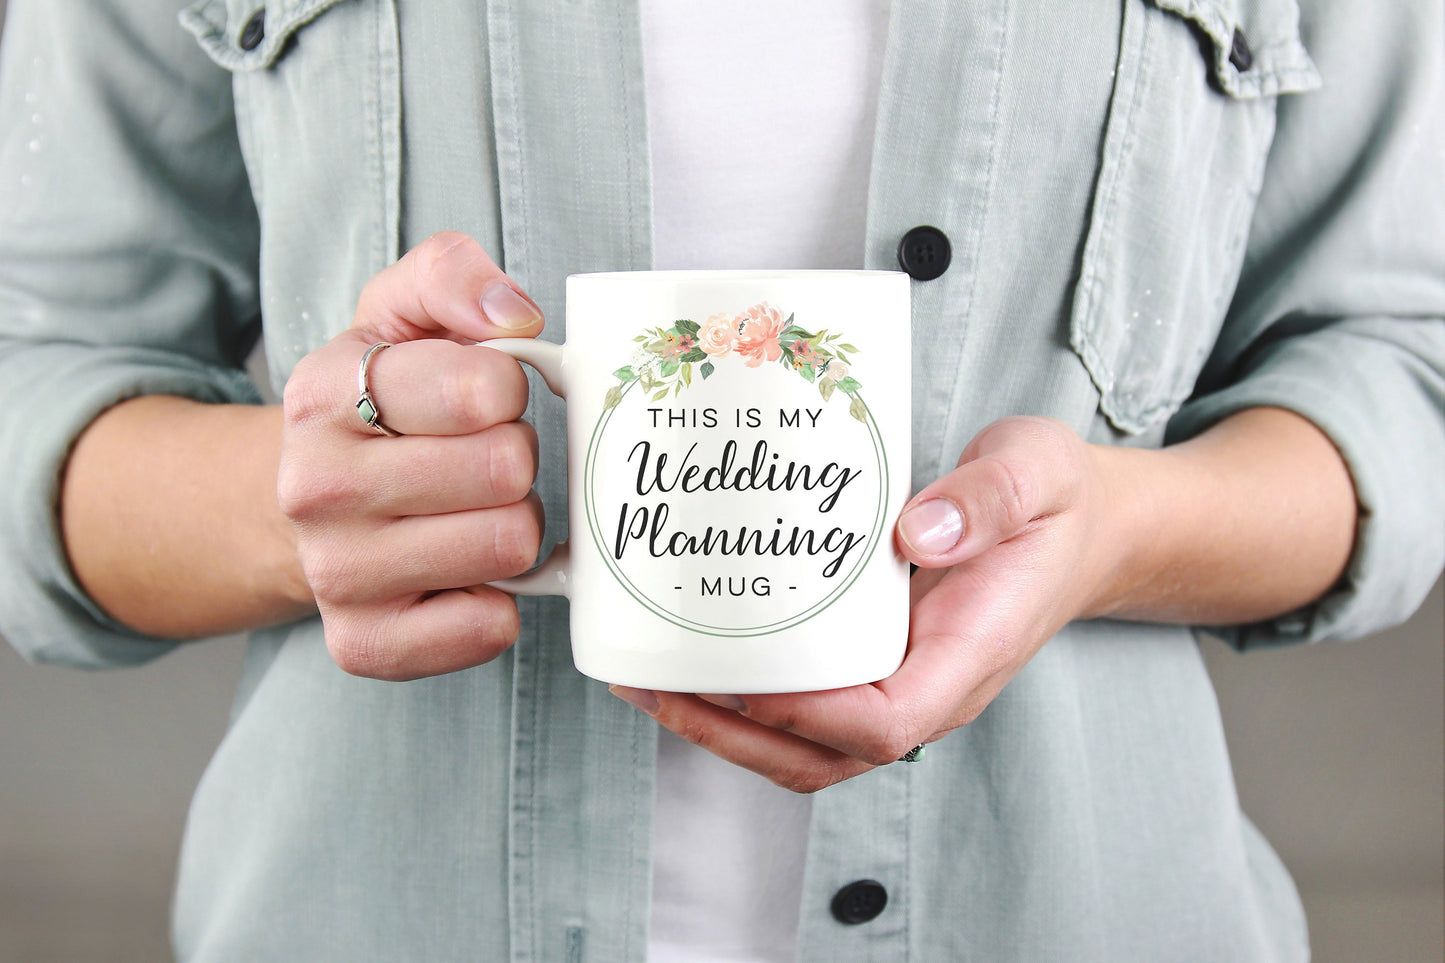 This Is My Wedding Planning Mug  - Bride To Be Mug, Wedding Mug, Engagement Gift, Bridal Shower, Gift For Bride, Bride Gift, Engagement Mug